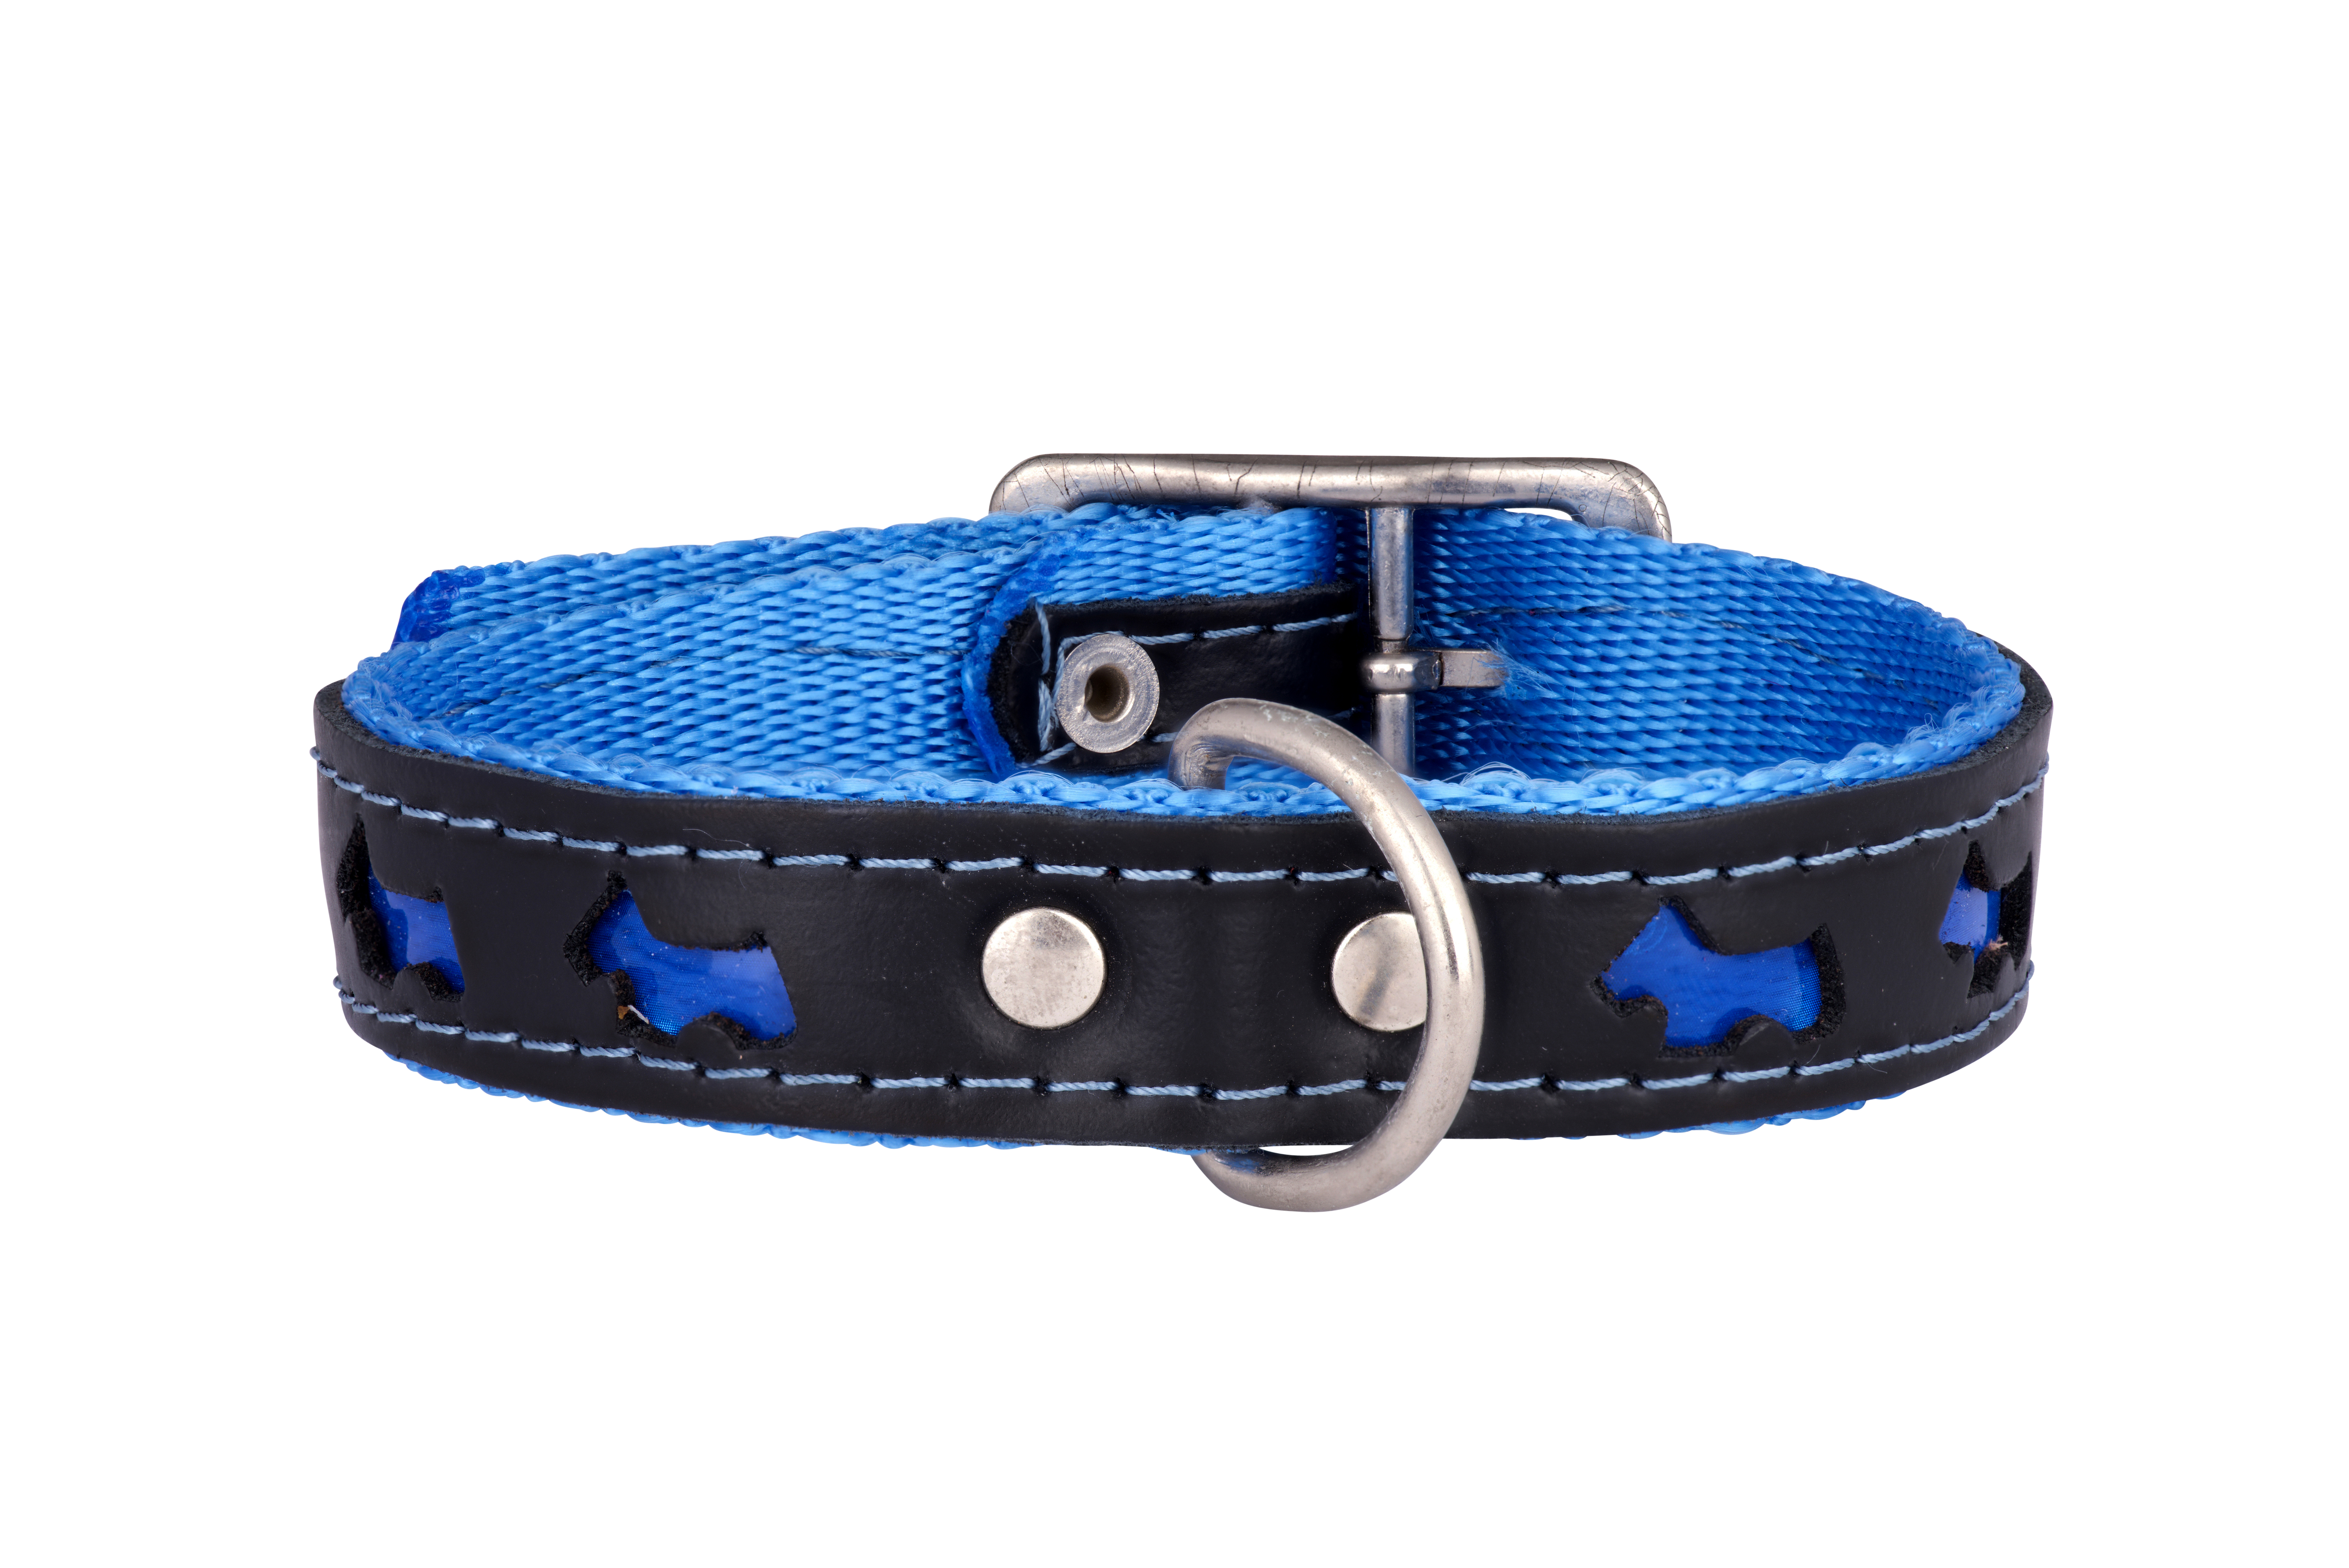 REFLEX Leather Designer Dog Collar and Lead in Blue by in Designer Dog Collars and Leads